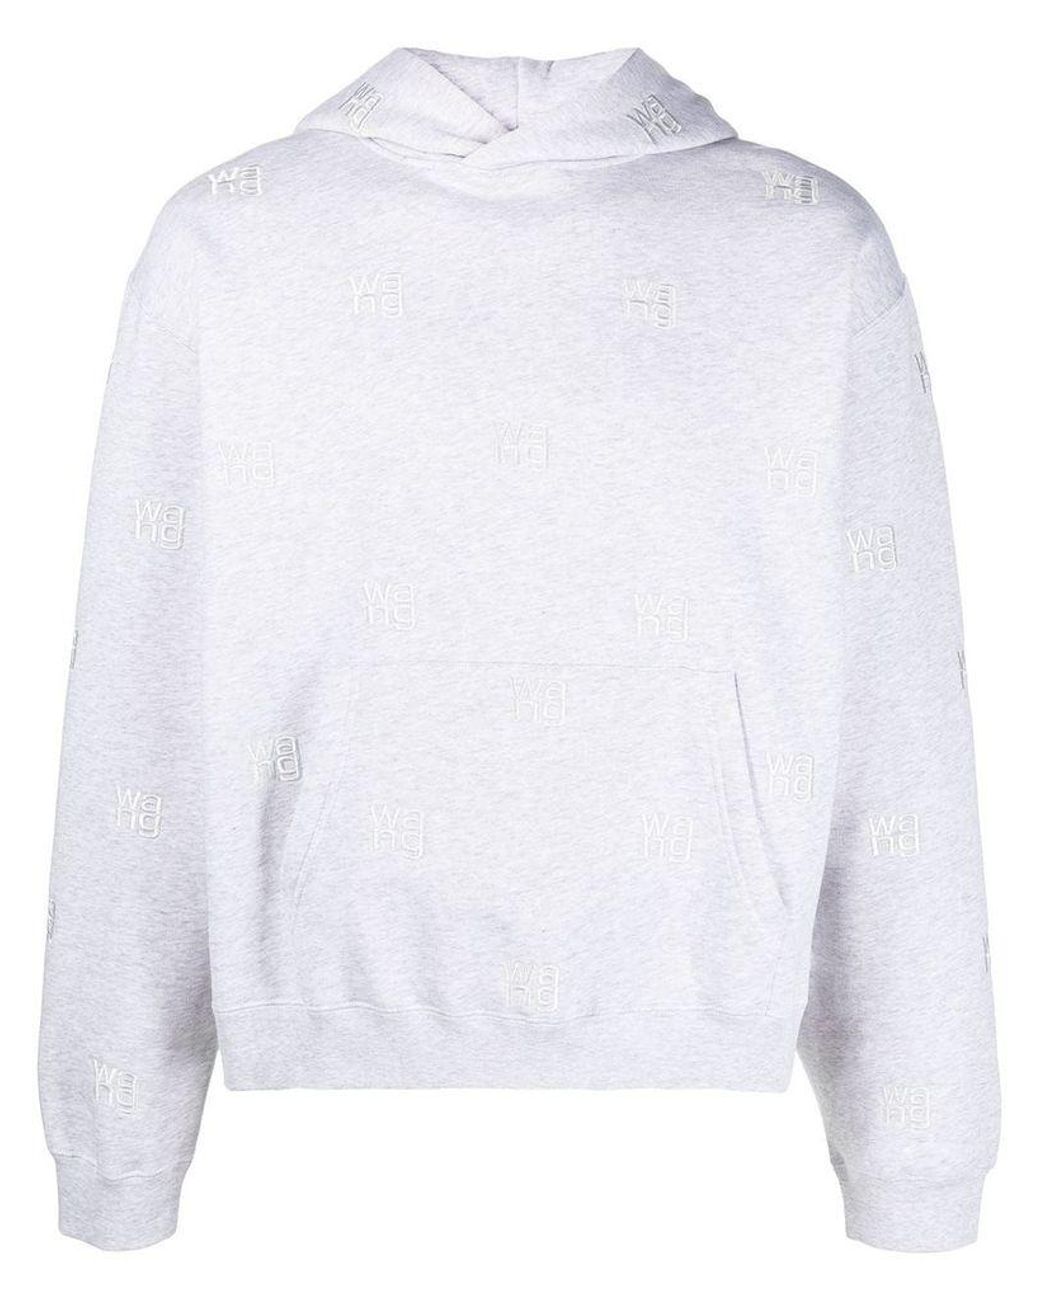 Alexander Wang Women's Ucc1211008030 Grey Cotton Sweatshirt in Gray - Lyst